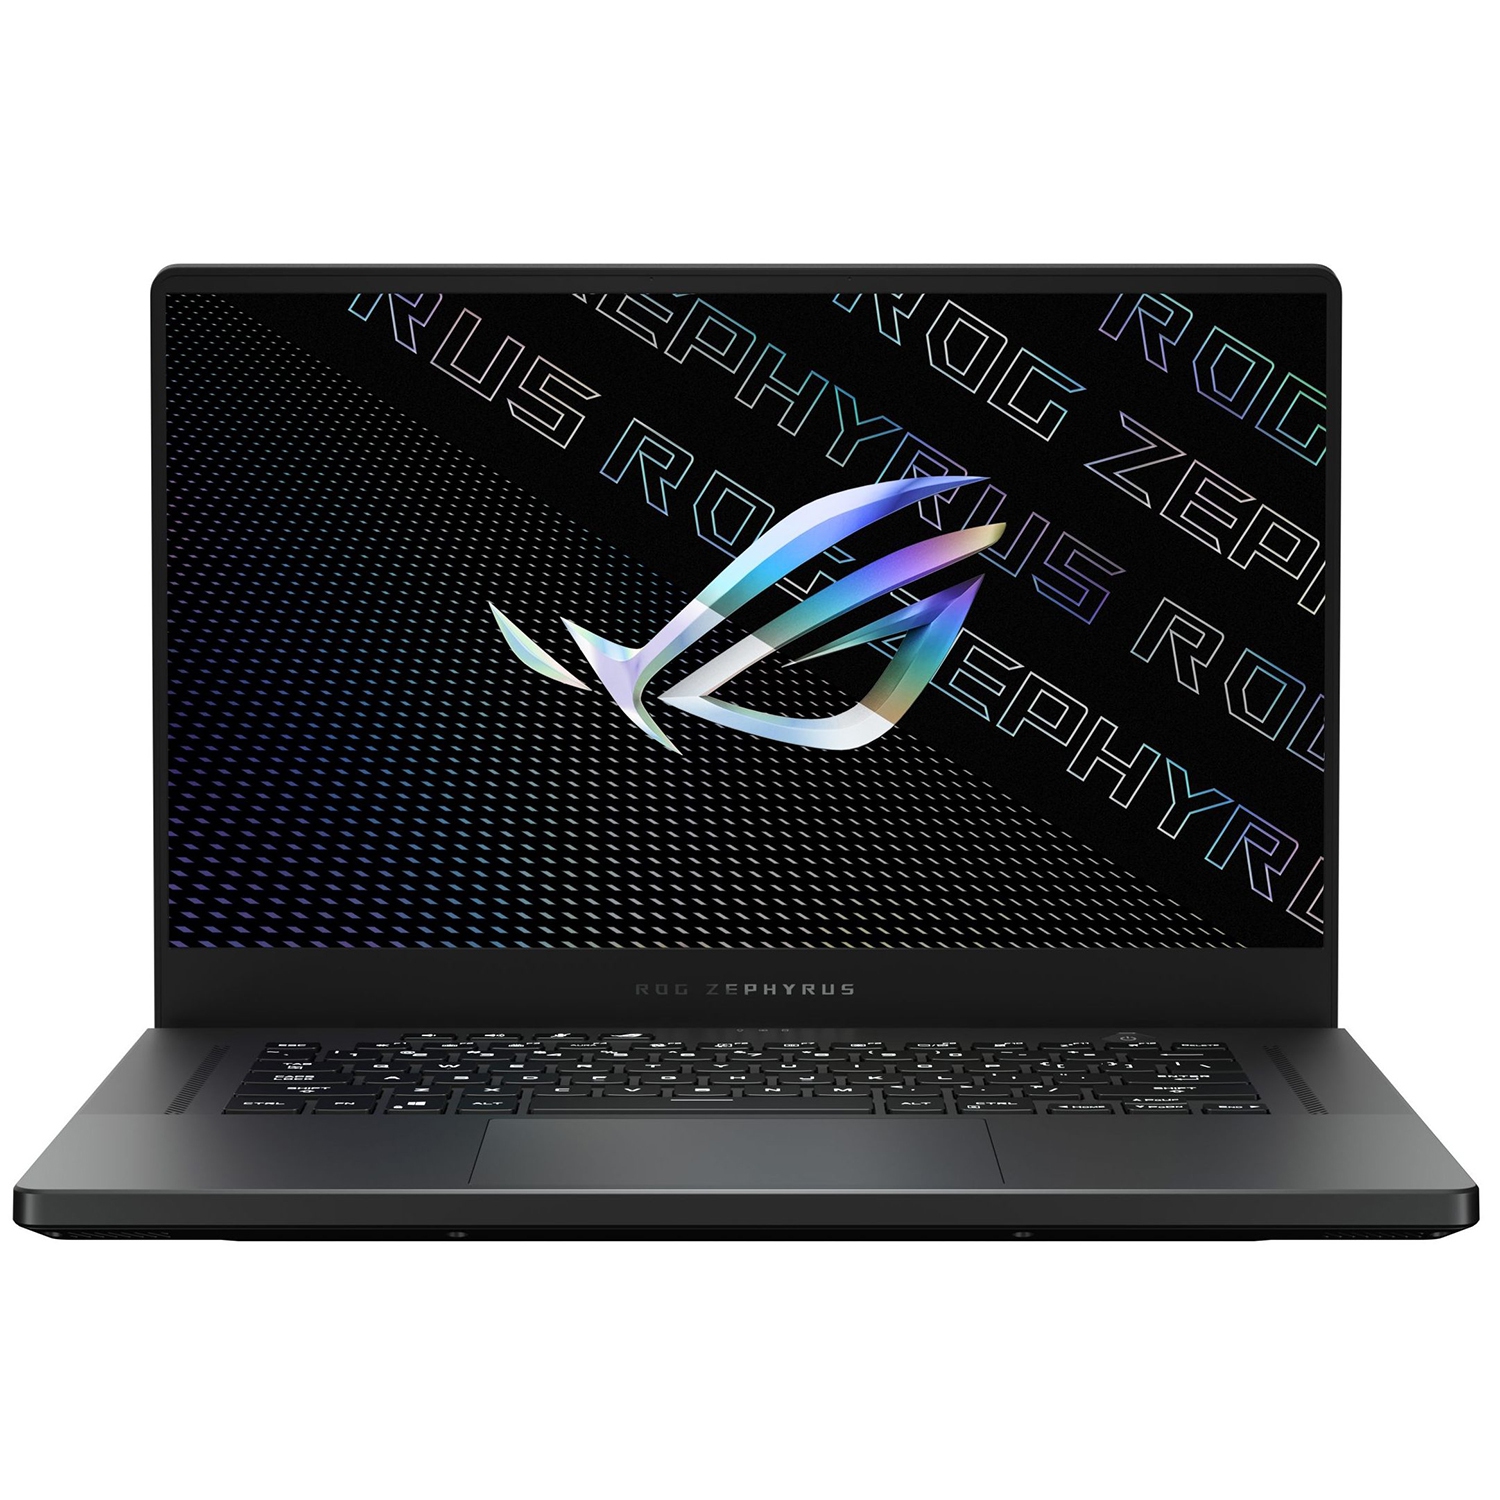 Custom ASUS ROG Zephyrus G15 Laptop (AMD Ryzen 9 5900HS, 24GB RAM, 4TB PCIe SSD, NVIDIA RTX 3060, Win 10 Pro)